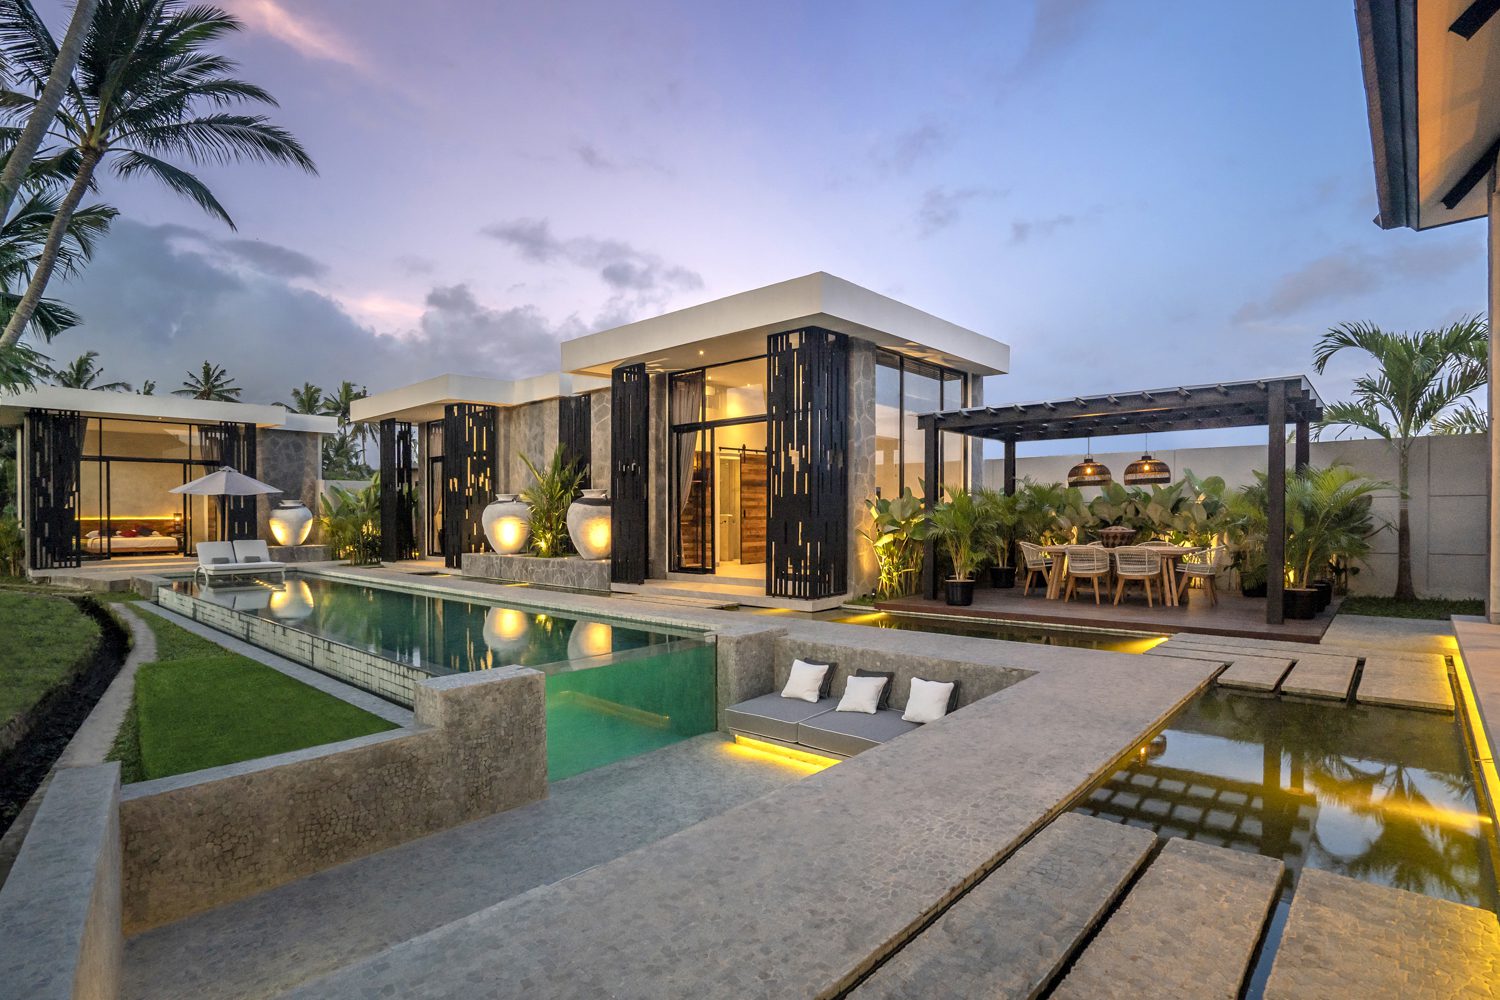 Villa Bora Bora | Bali Super Host (Your Global Property Service Partner)